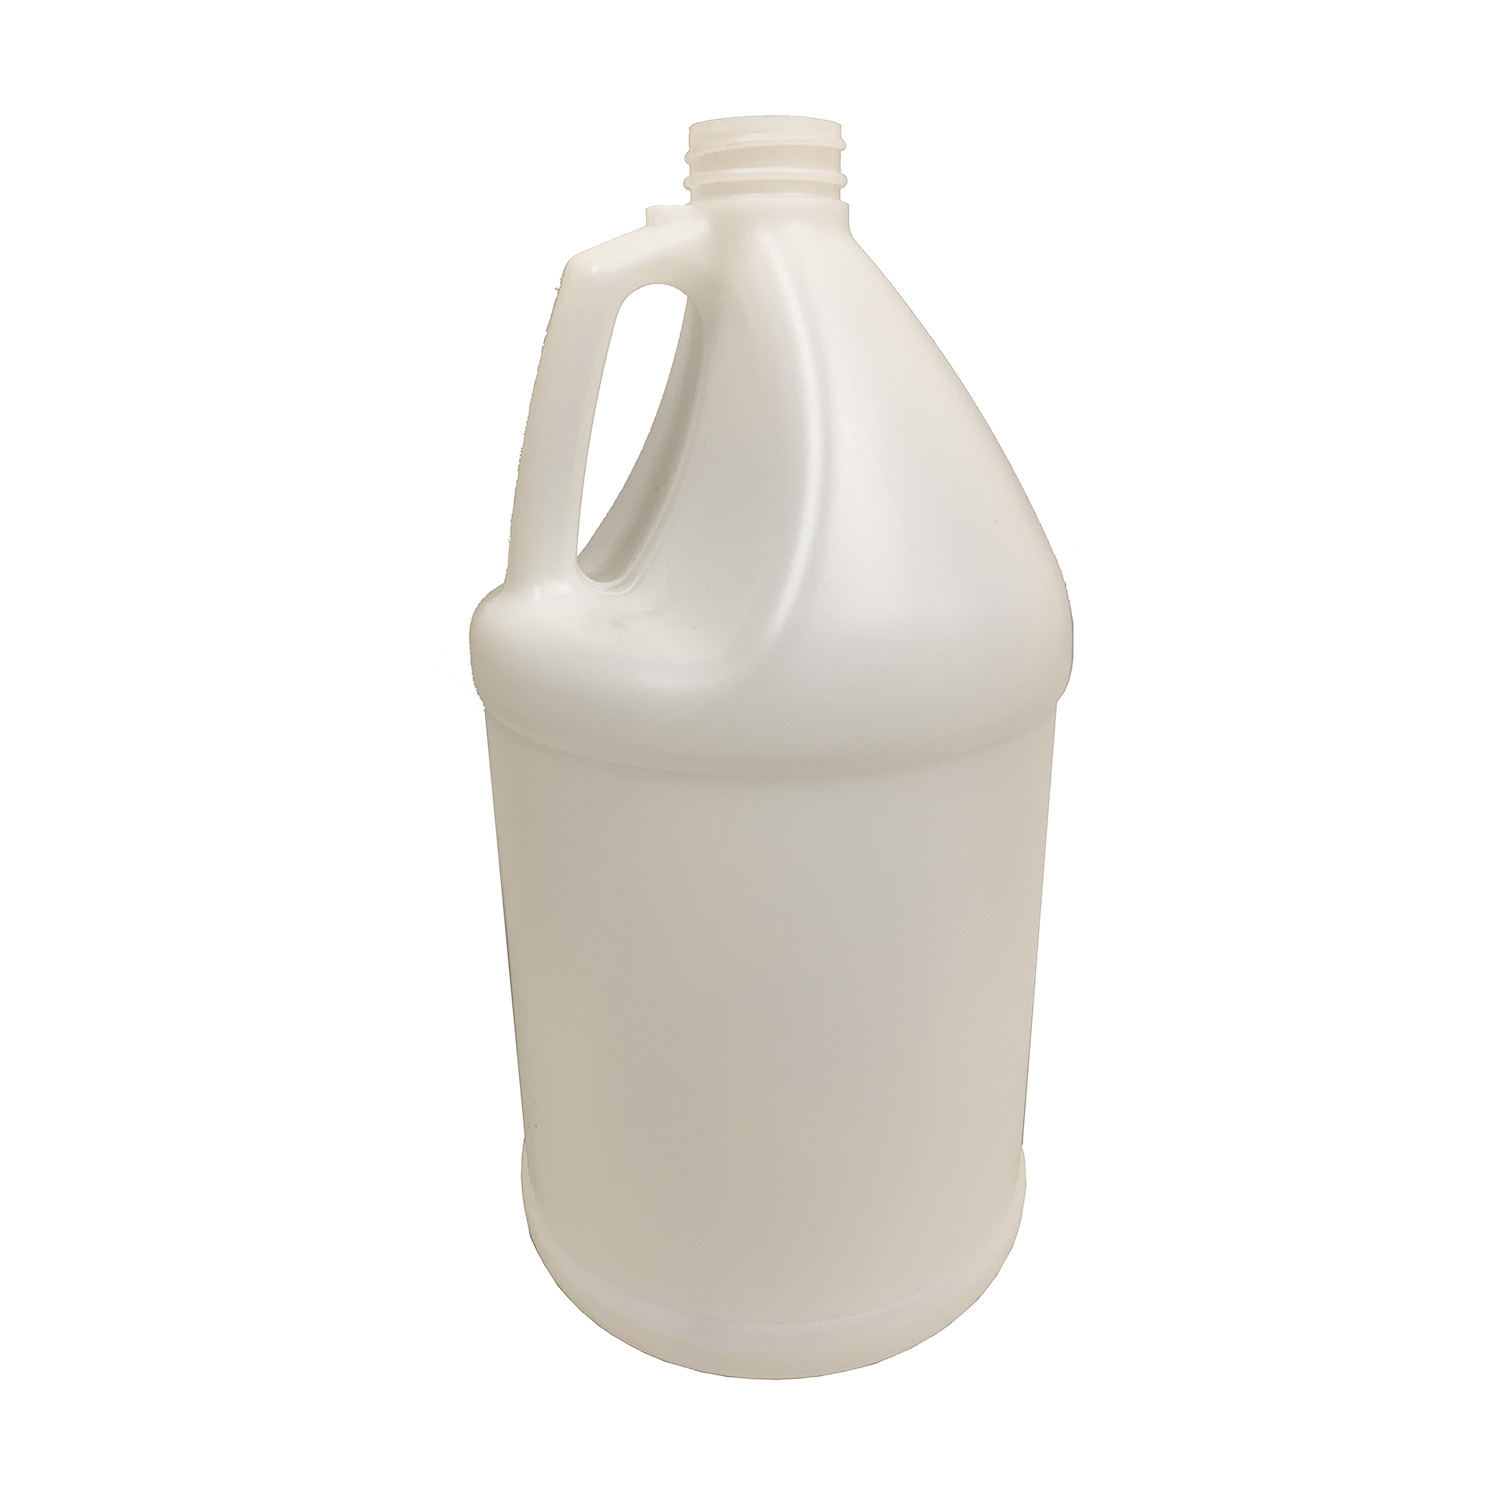 1 gallon industrial round plastic bottles for sale in bulk